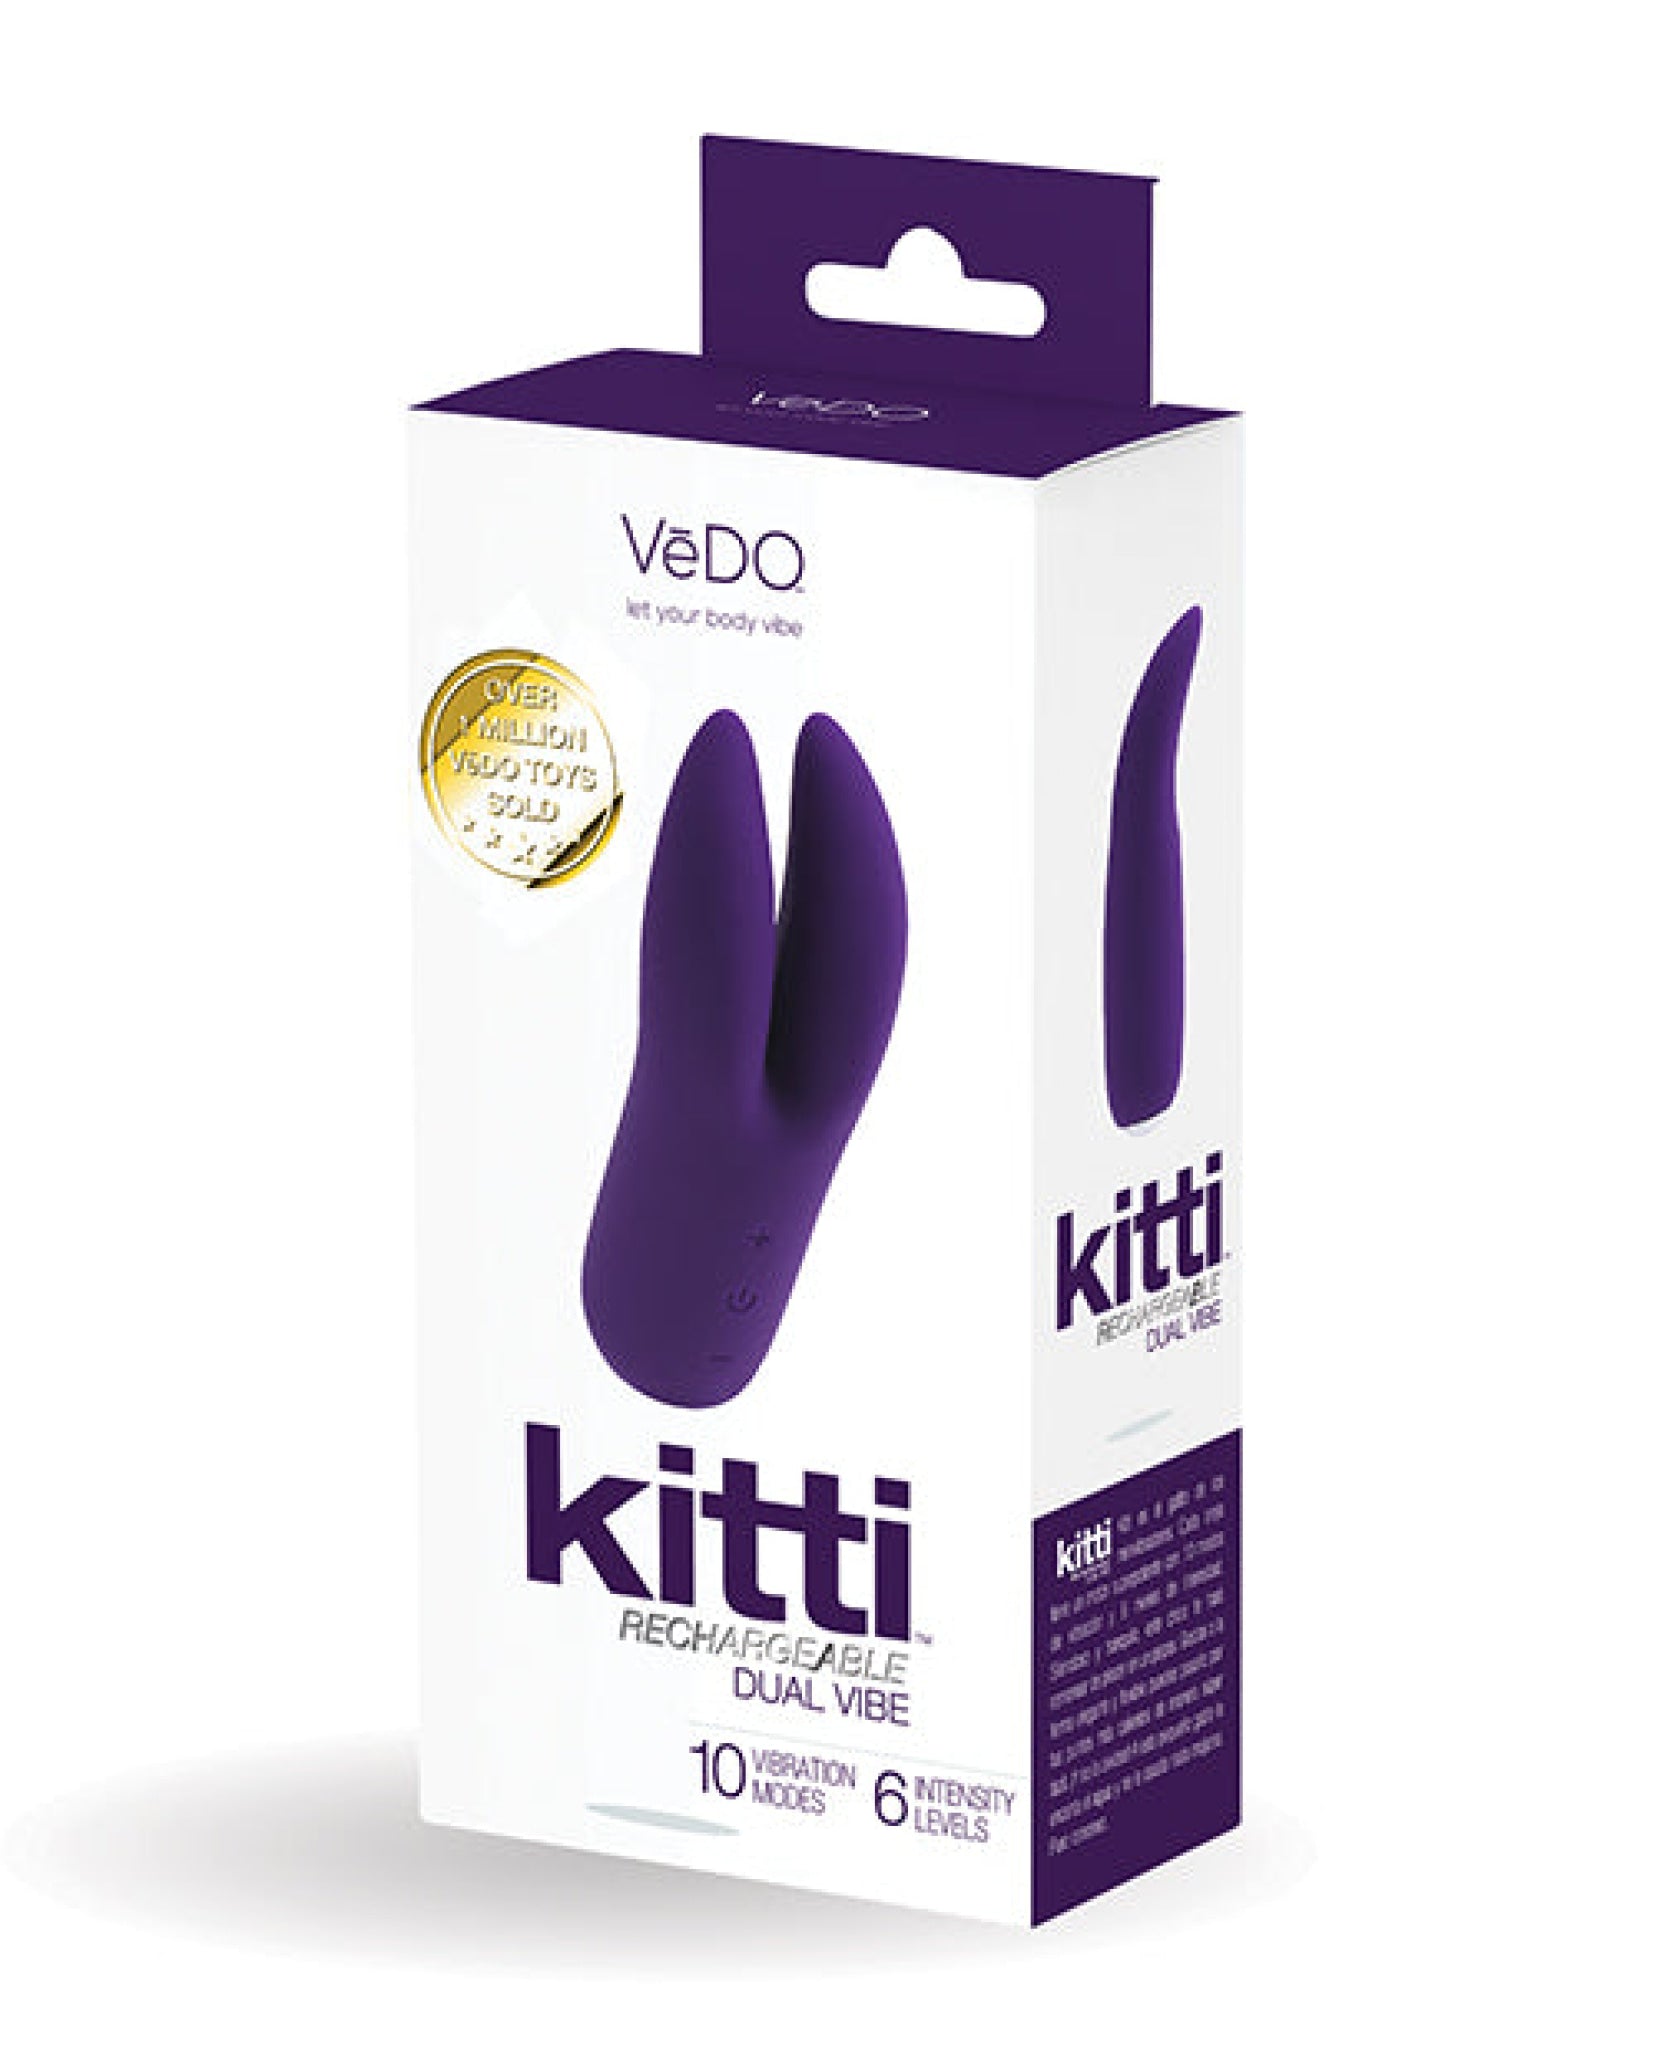 Vedo Kitti Rechargeable Dual Vibe VēDO